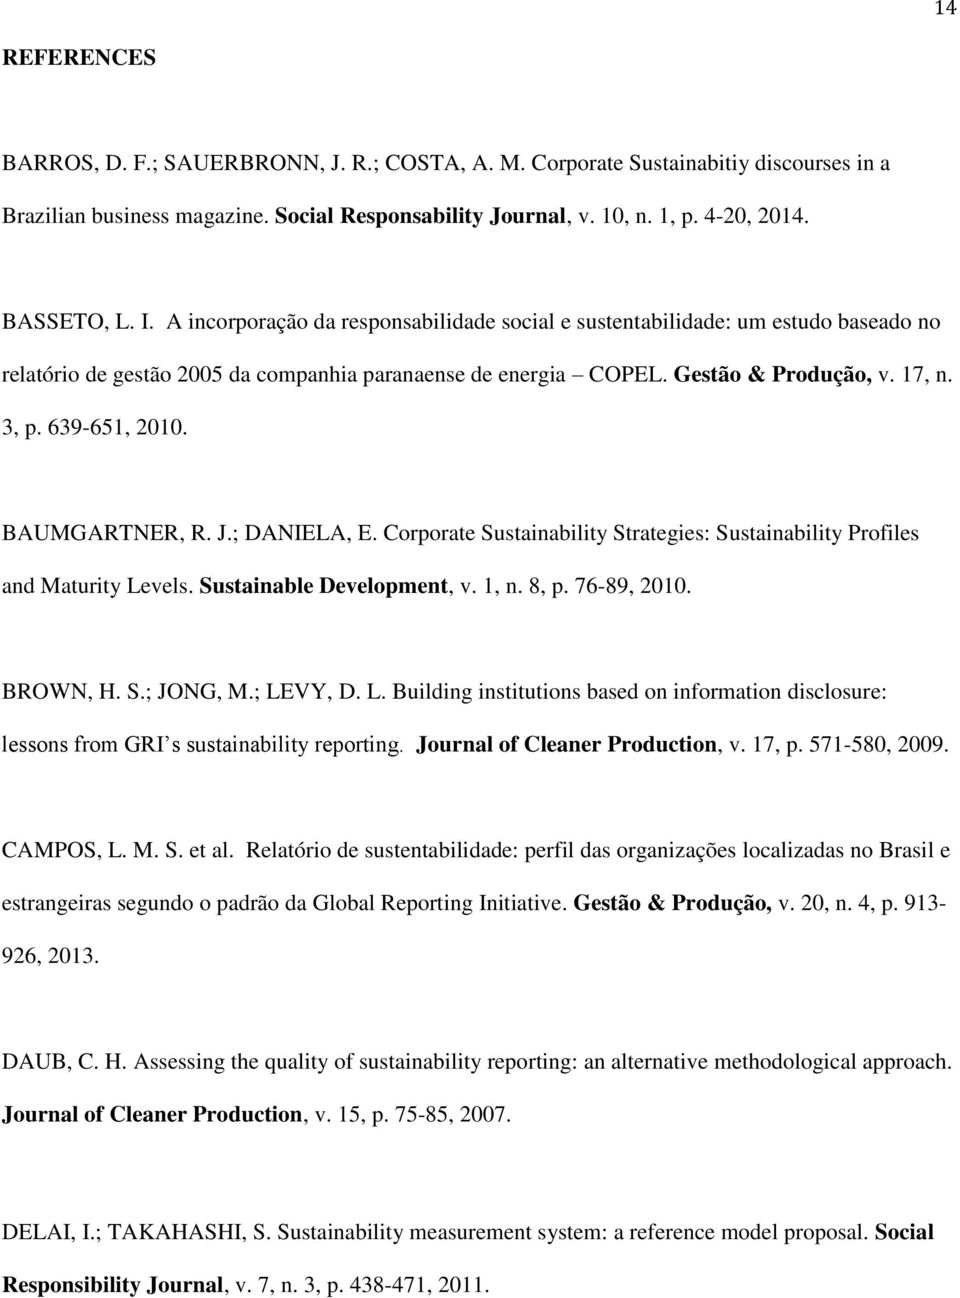 639-651, 2010. BAUMGARTNER, R. J.; DANIELA, E. Corporate Sustainability Strategies: Sustainability Profiles and Maturity Levels. Sustainable Development, v. 1, n. 8, p. 76-89, 2010. BROWN, H. S.; JONG, M.